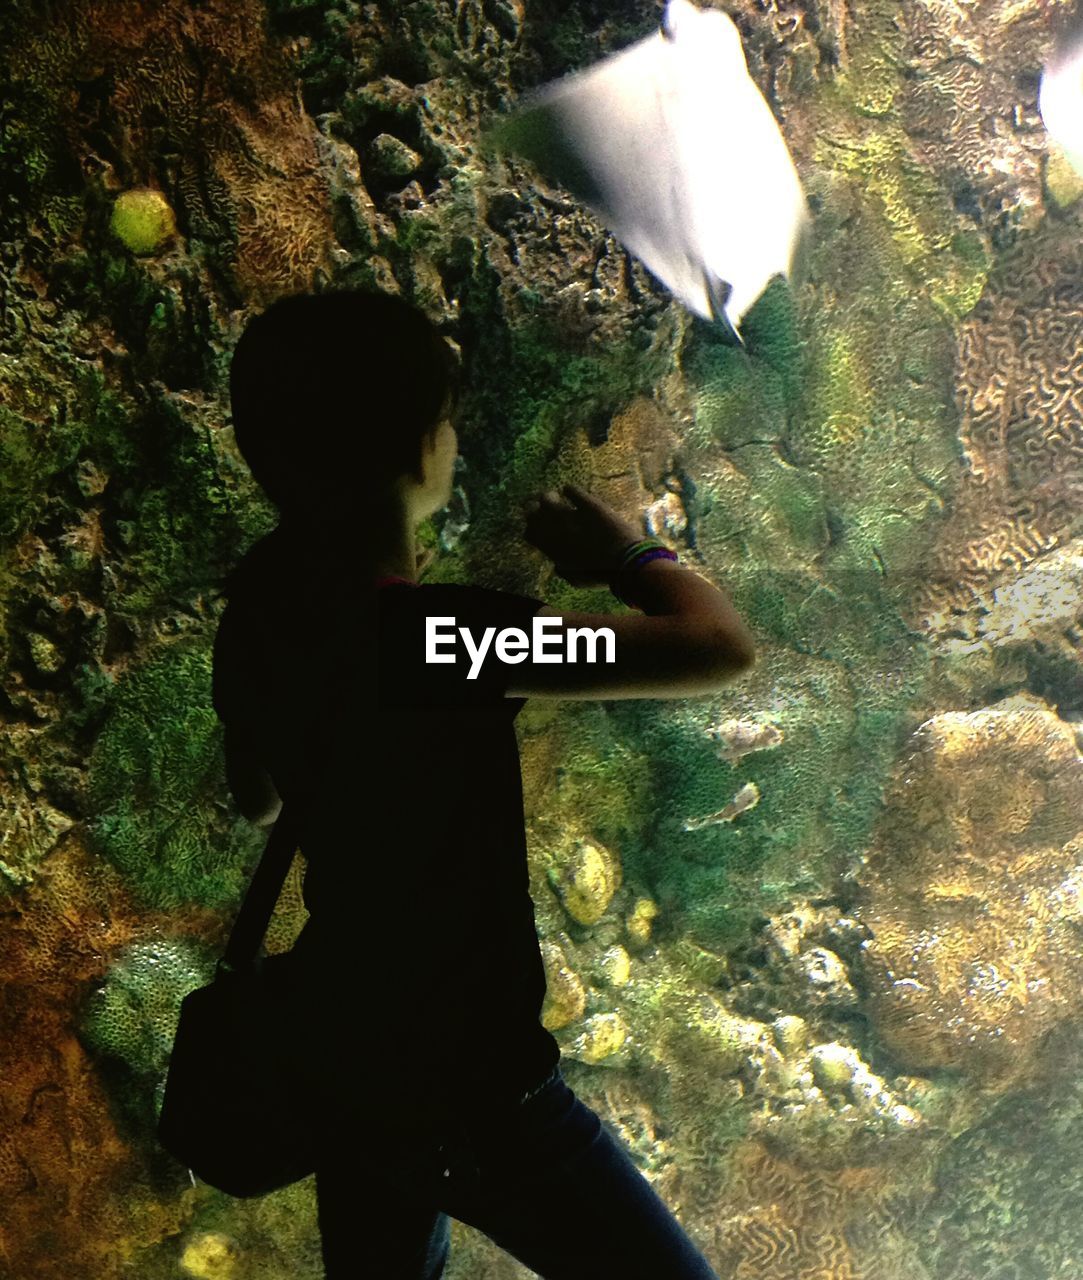 Girl looking at sting ray in aquarium